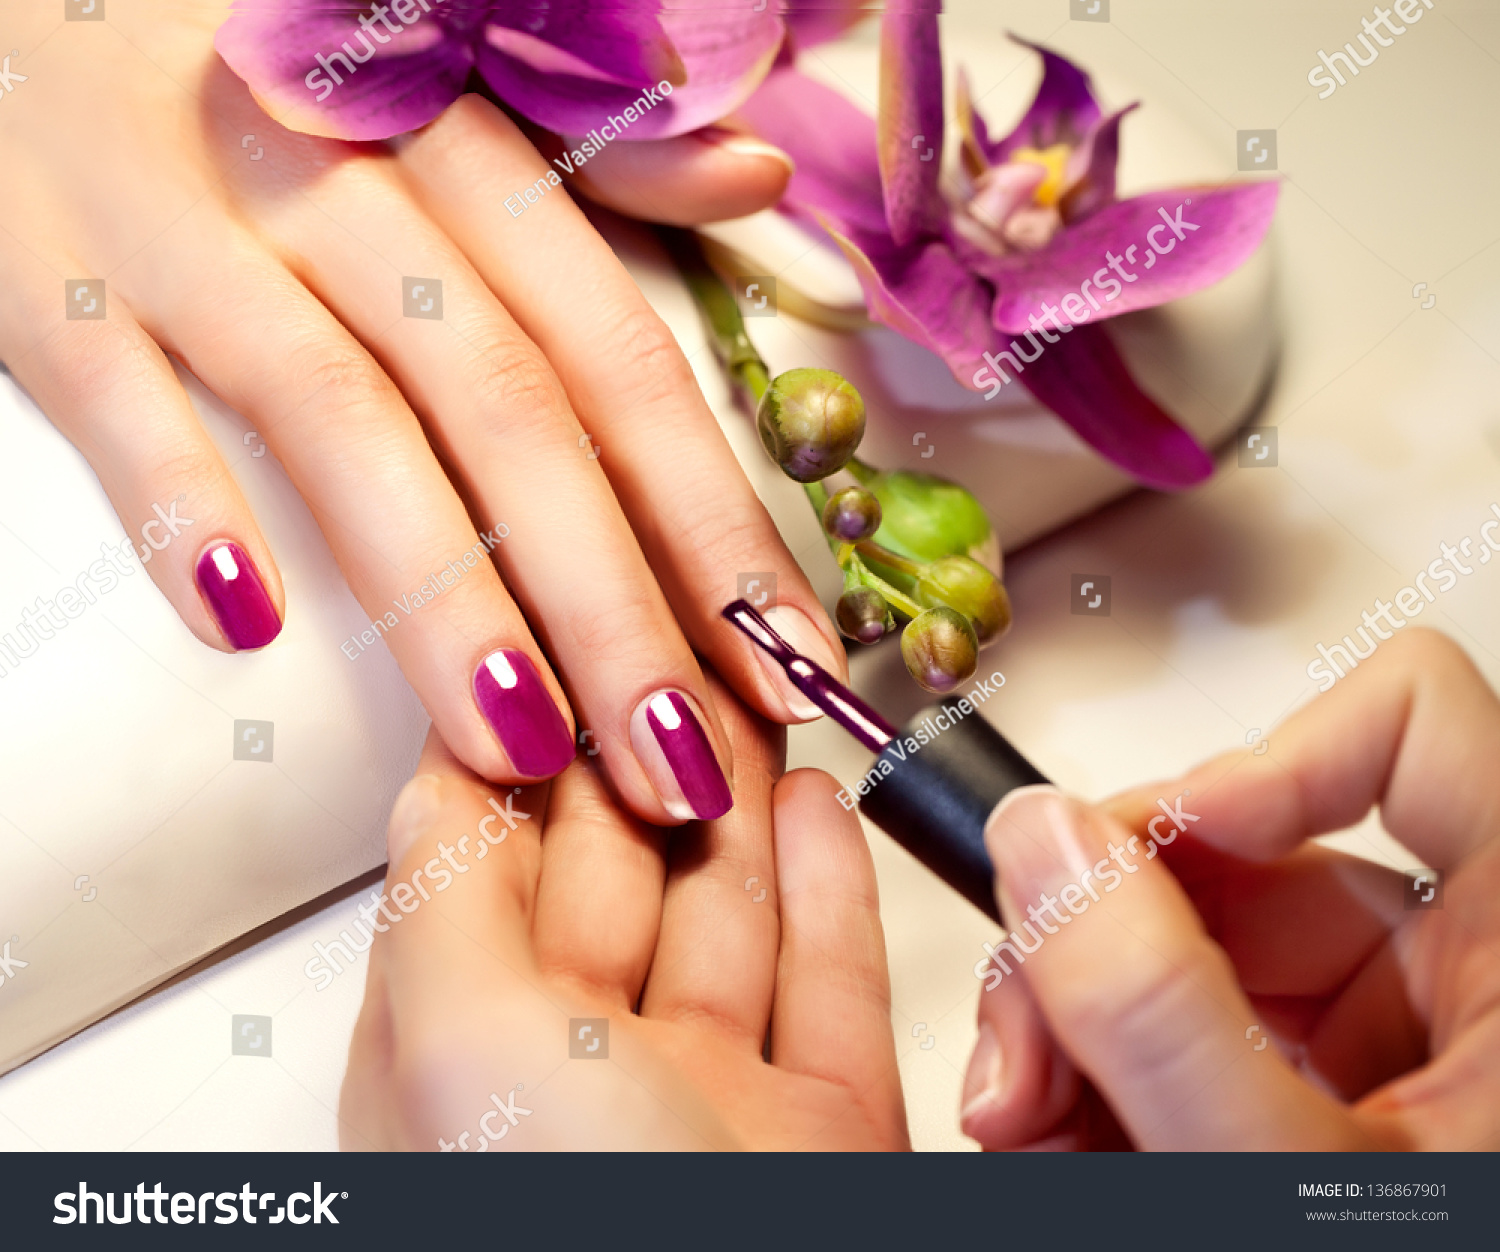 Manicure nail paint pink color #136867901